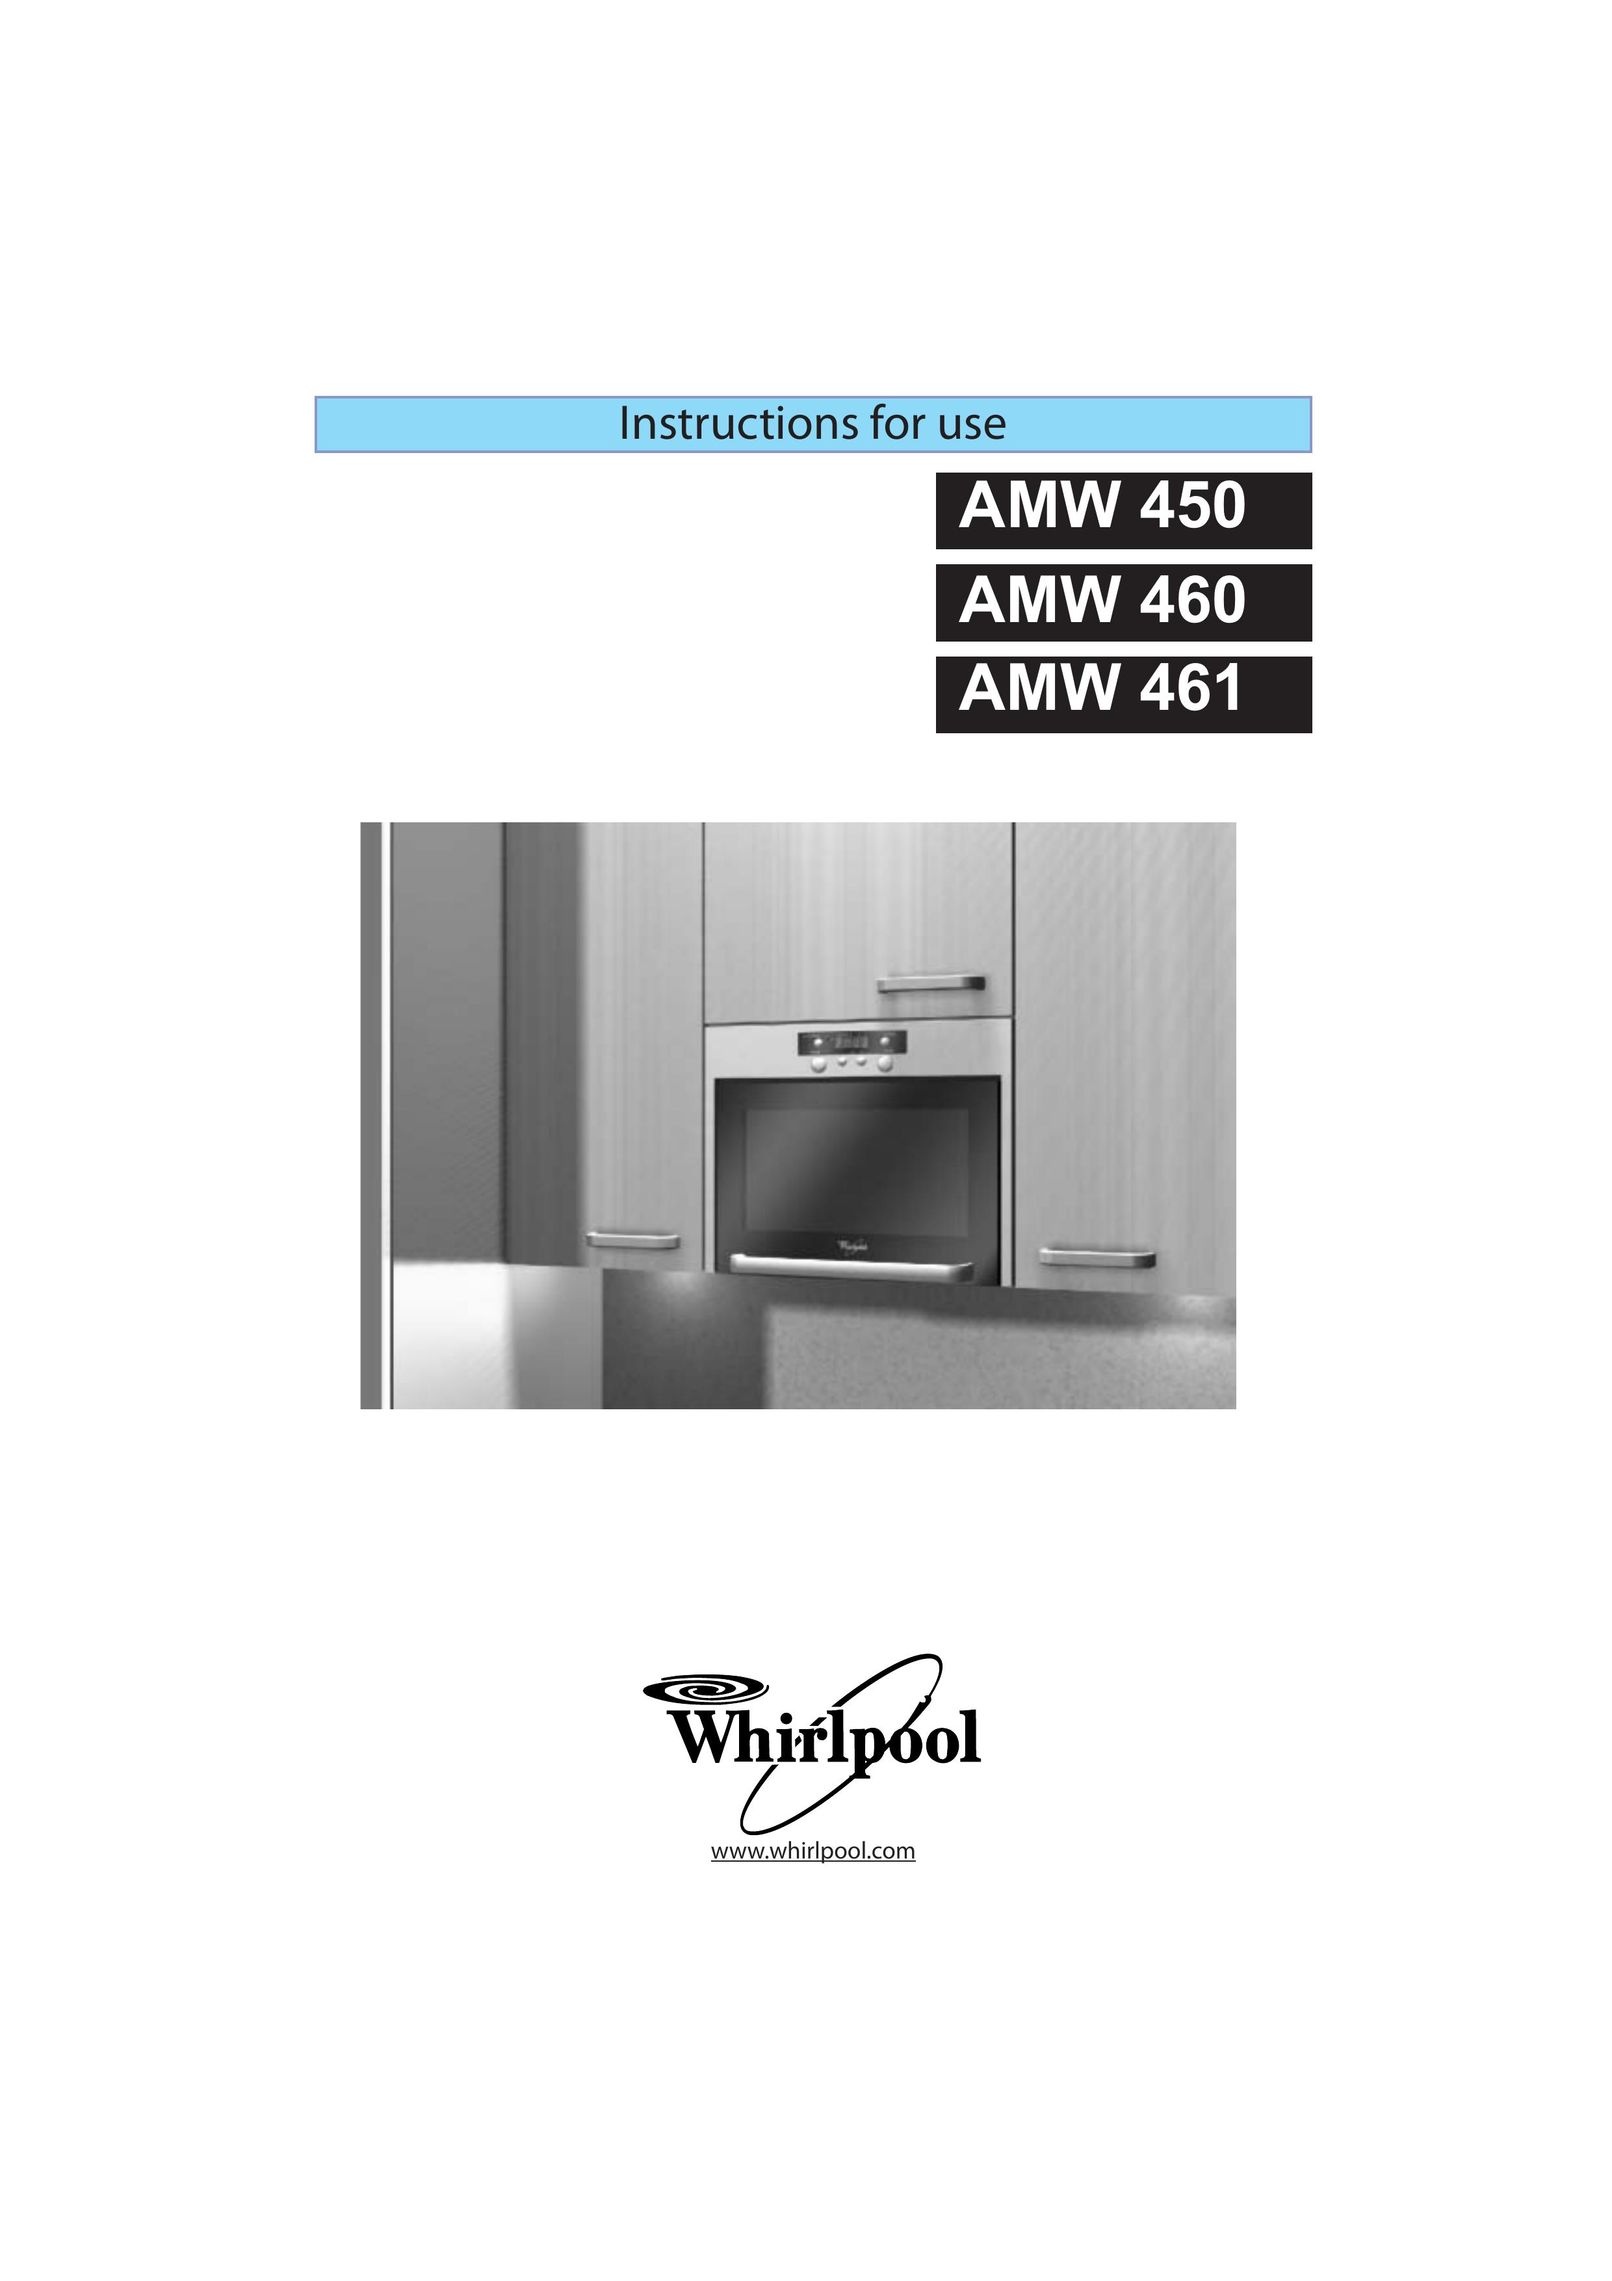 Whirlpool AMW 450 Microwave Oven User Manual